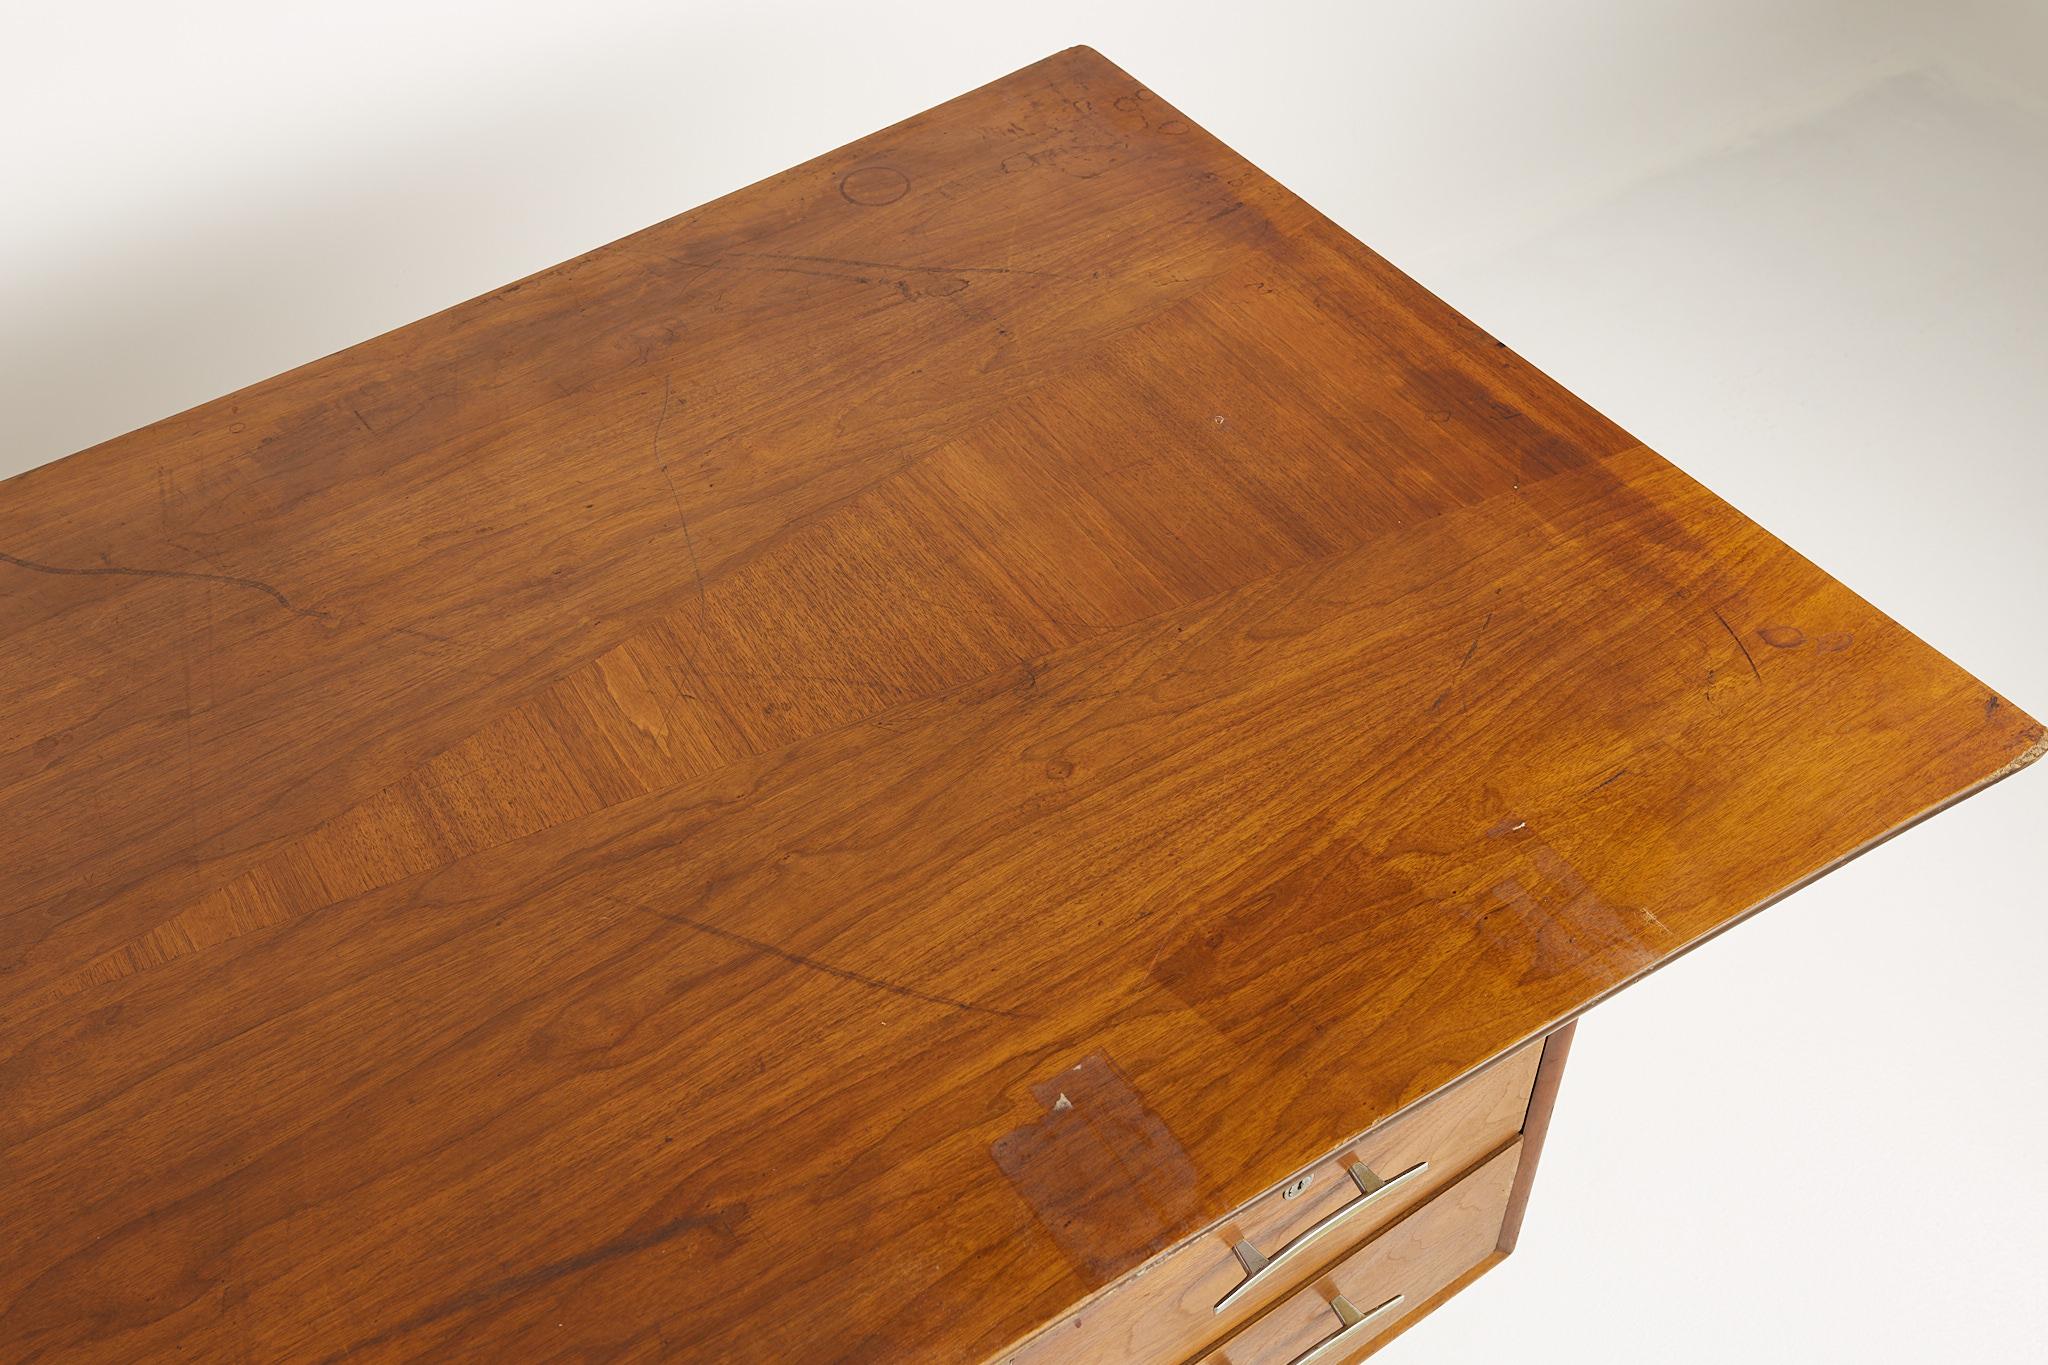 Standard Furniture Company Mid Century Walnut Brass and Cane Bowtie Desk 1